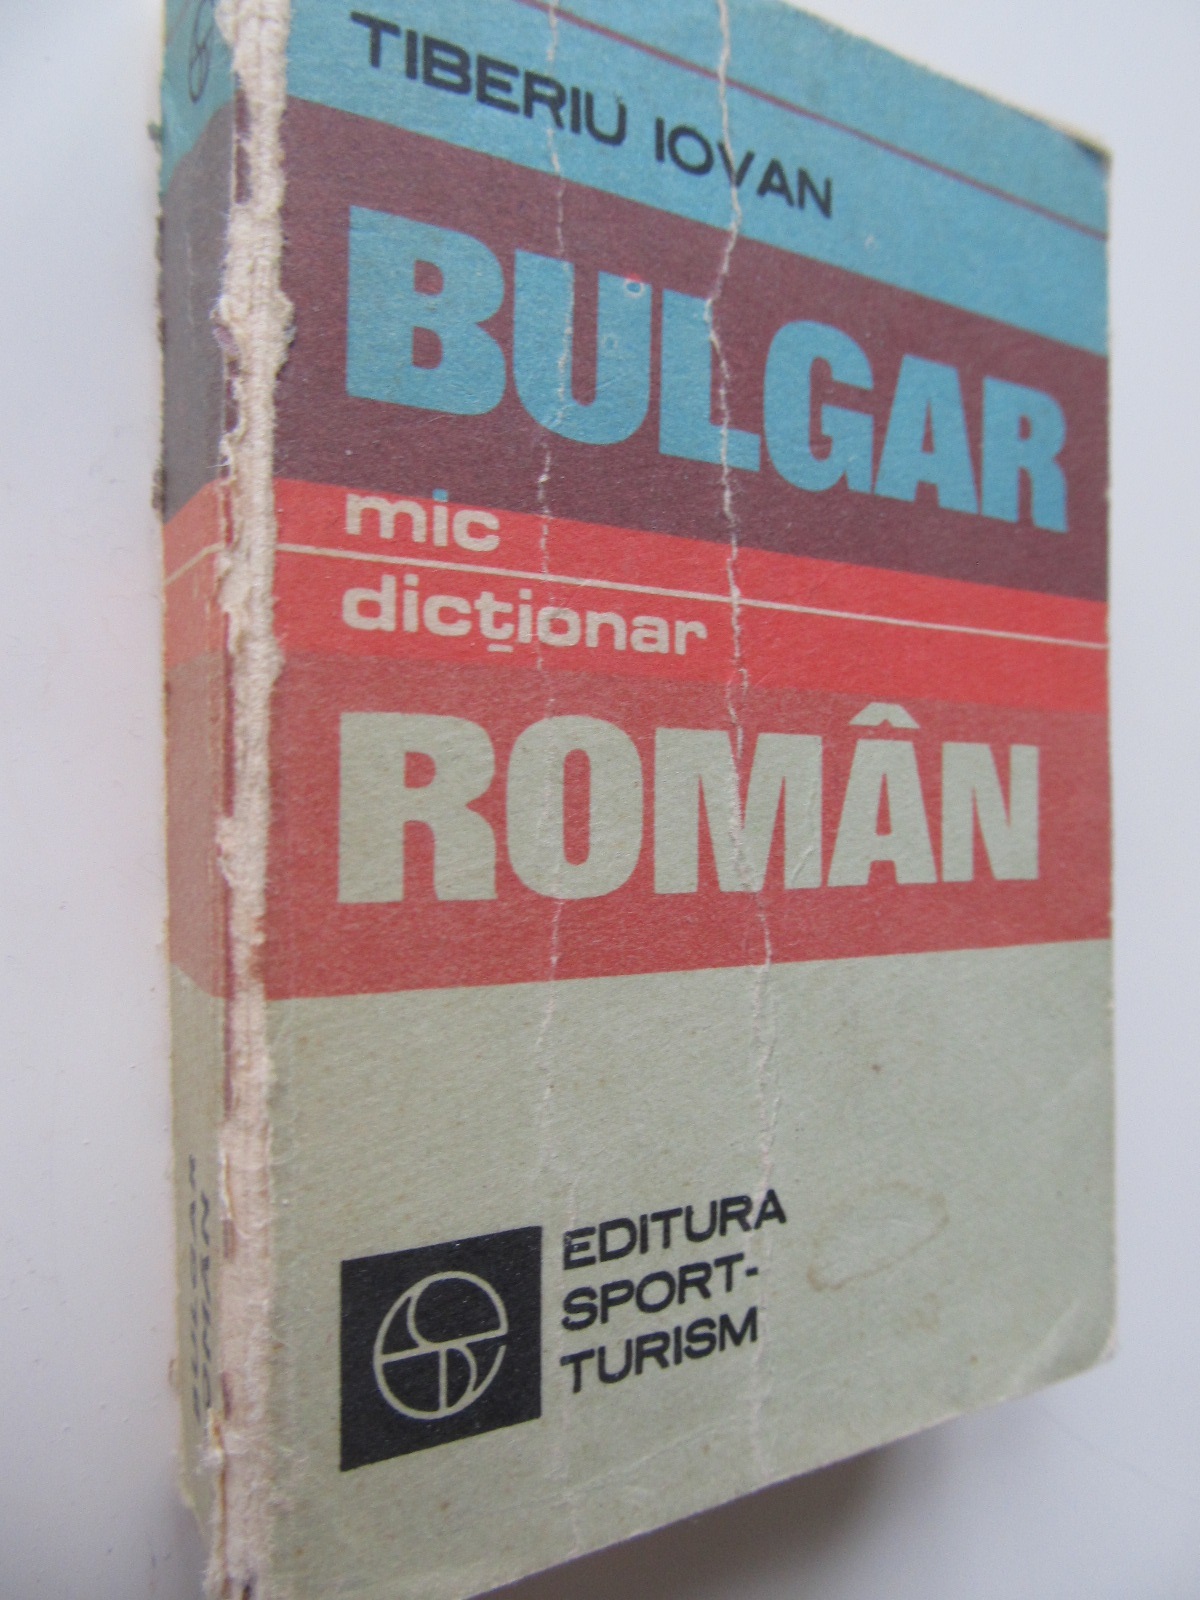 Mic dictionar Bulgar Roman - Tiberiu Iovan | Detalii carte